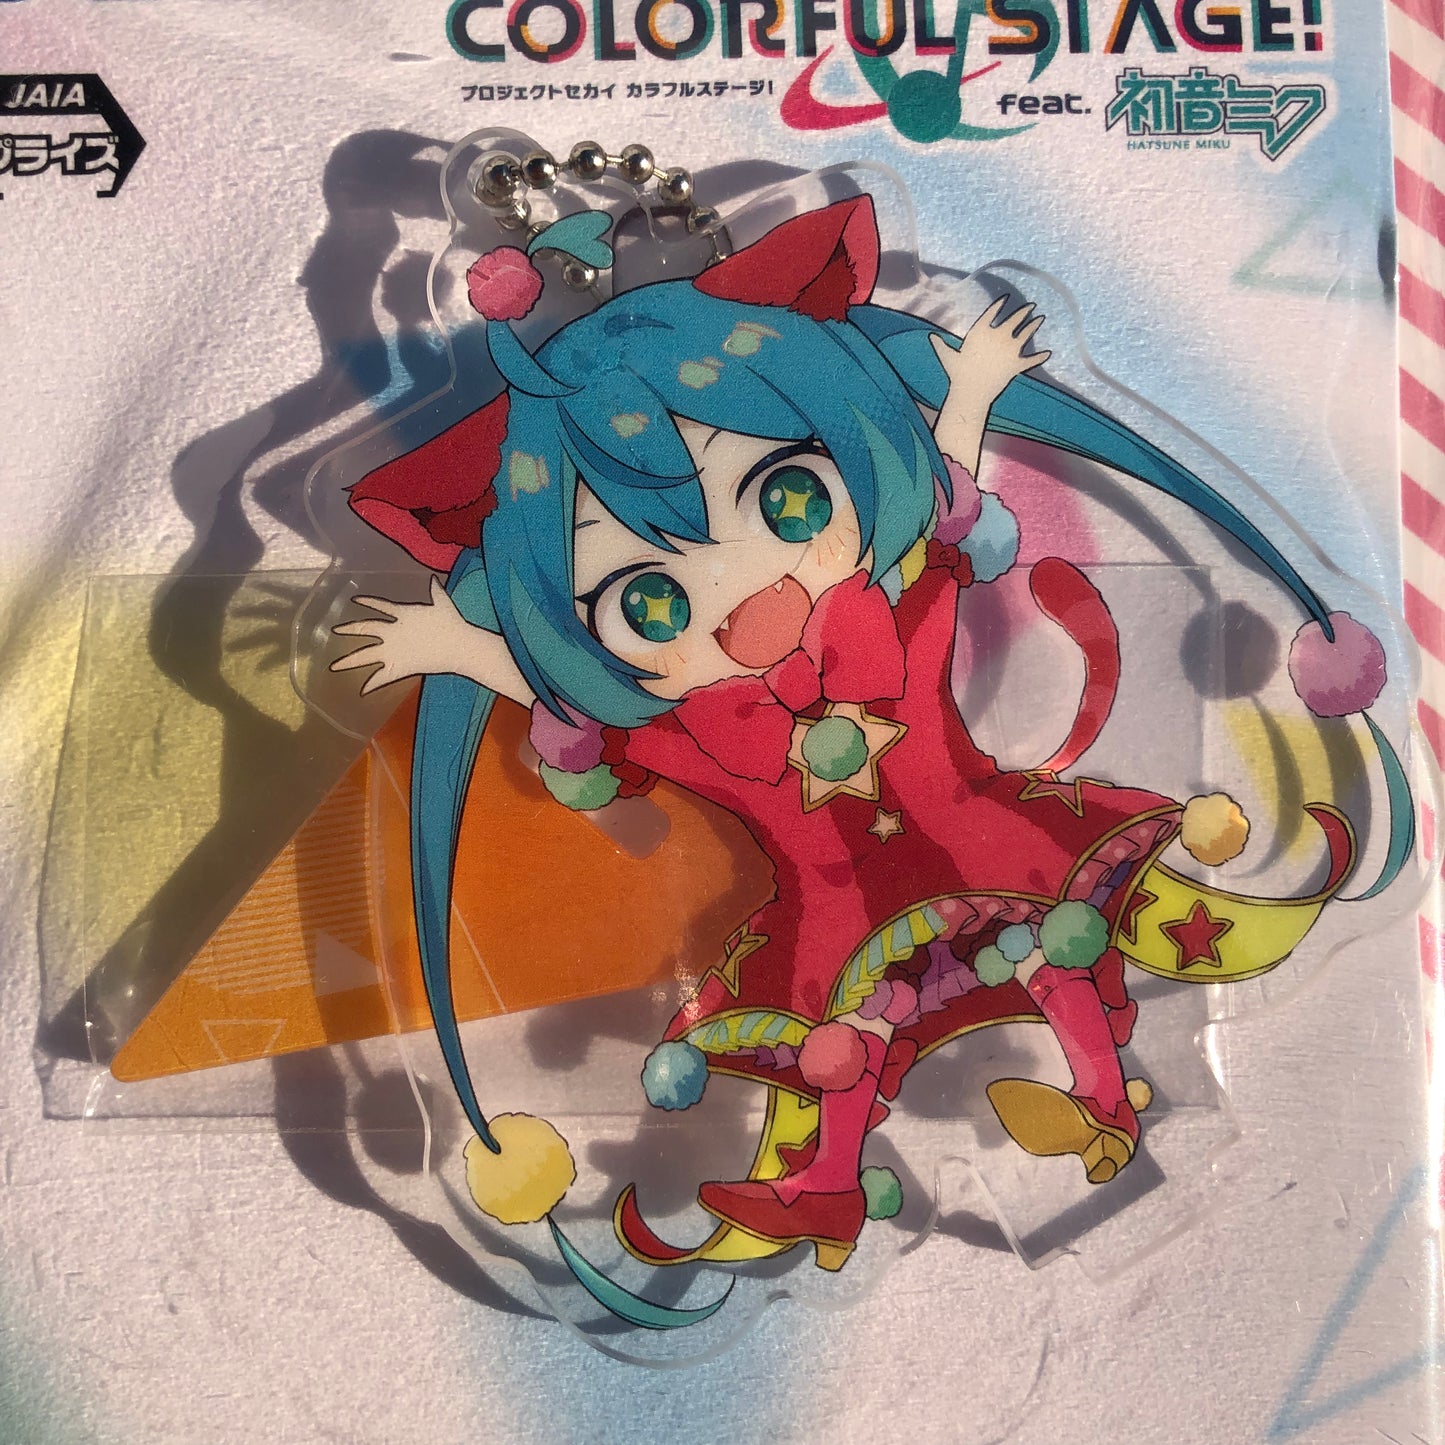 Hatsune Miku Acrylic Stand Keychain - Project Sekai Colorful Stage! ft. Hatsune Miku Vol.4